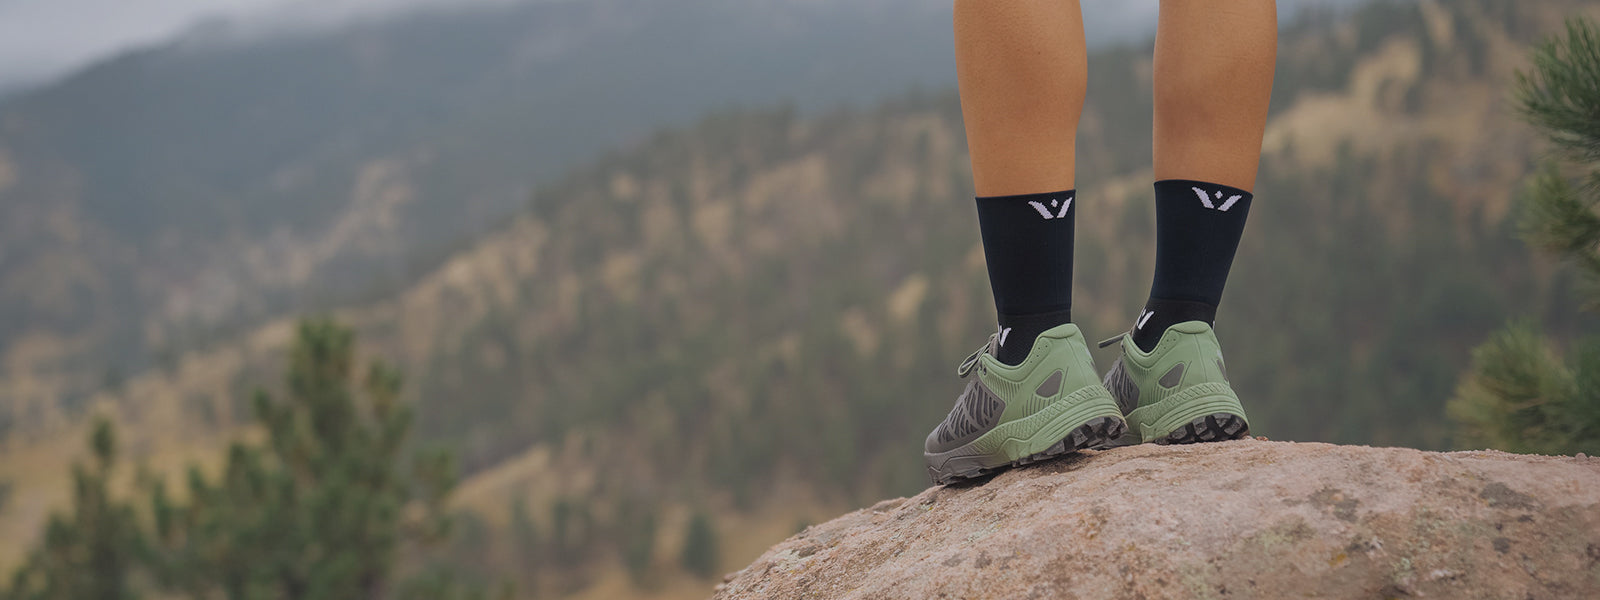 Women's Quarter Crew Socks header image, woman hiking